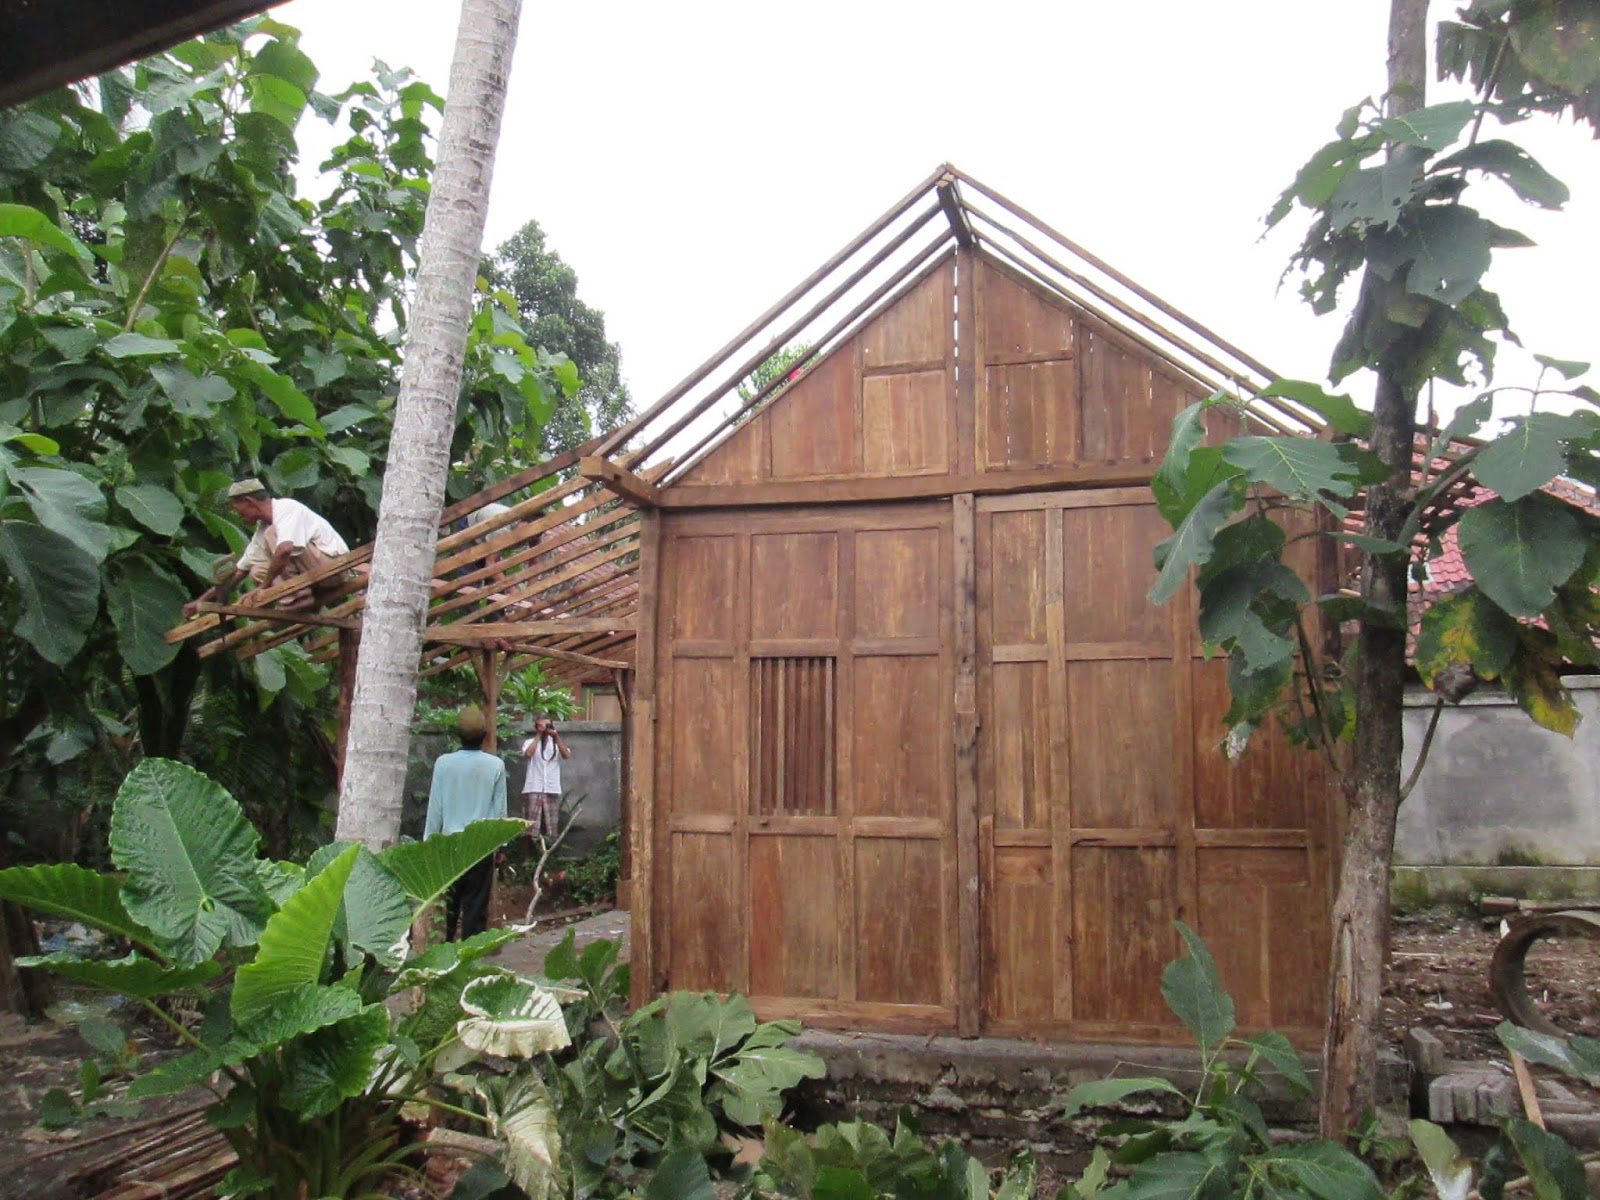 Jual Rumah Kampung Kayu Jati Full Gebyok 30 M2 Jual Rumah